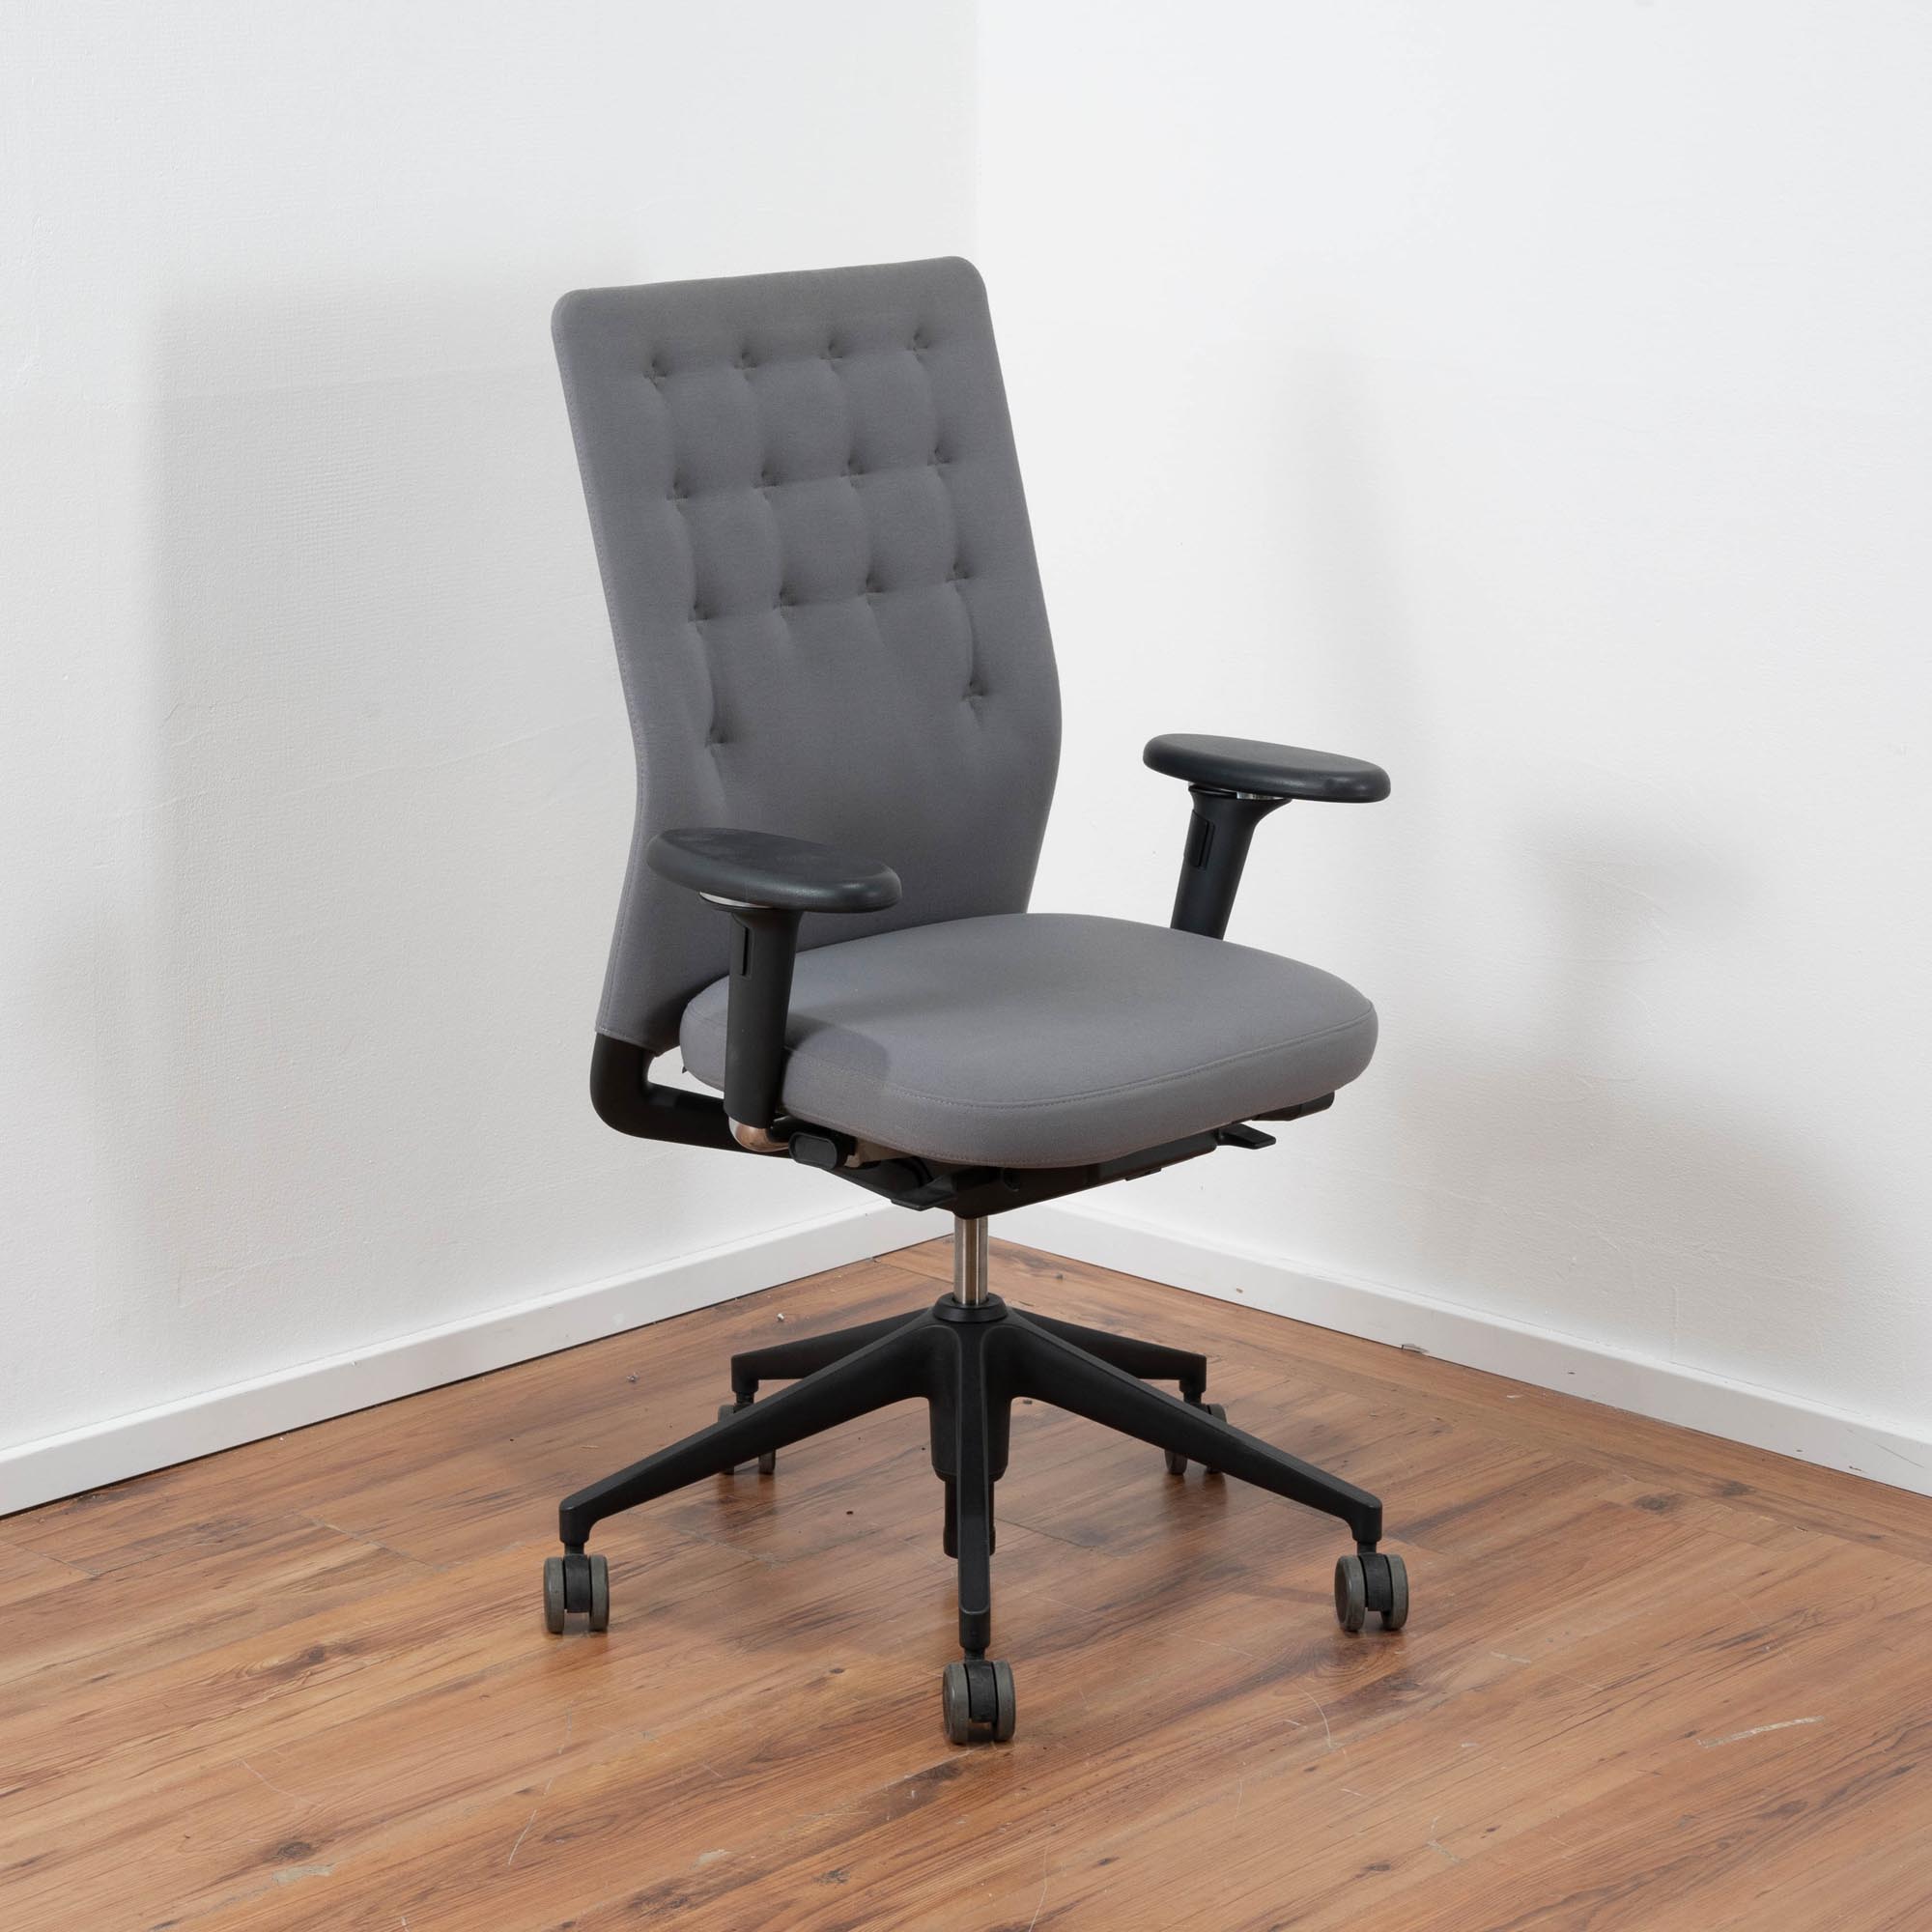 Vitra "ID Trim" Bürodrehstuhl - Sitzrücken Polster Stoff grau - 5-Fuß Gestell schwarz